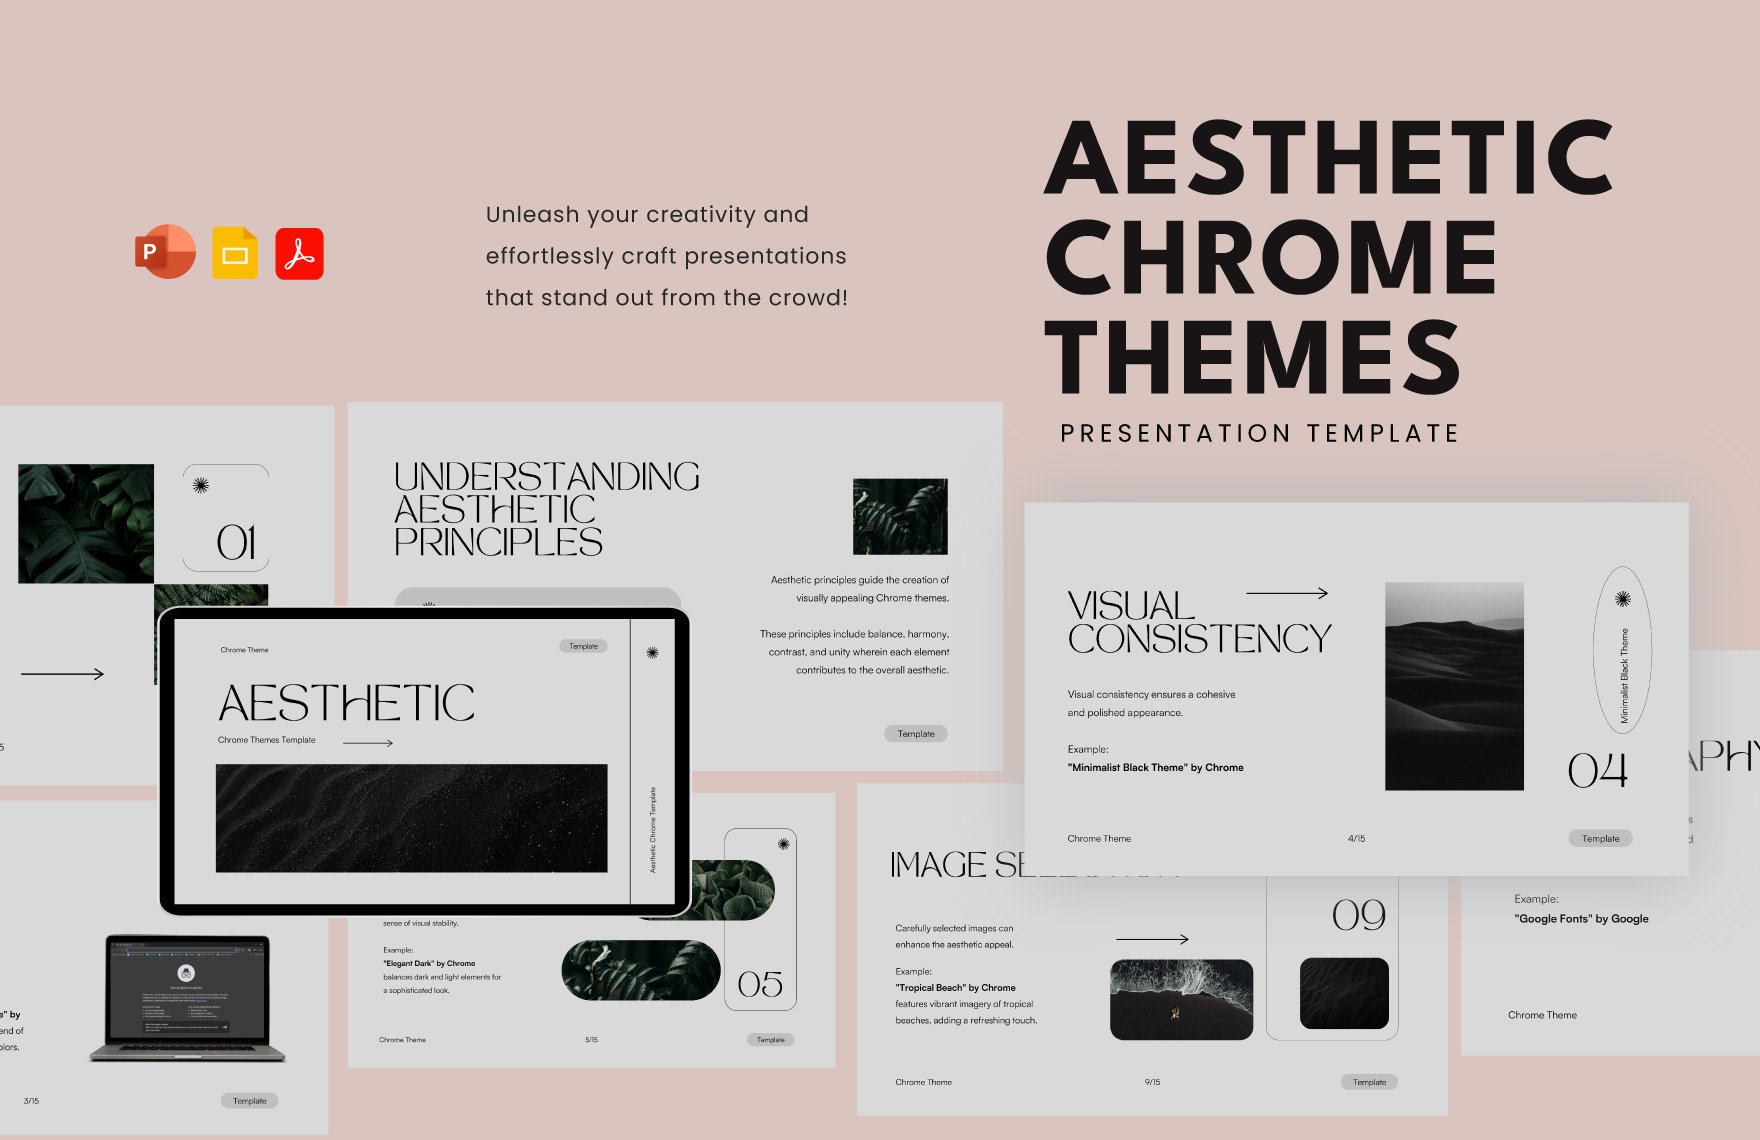 Aesthetic Chrome Themes Template